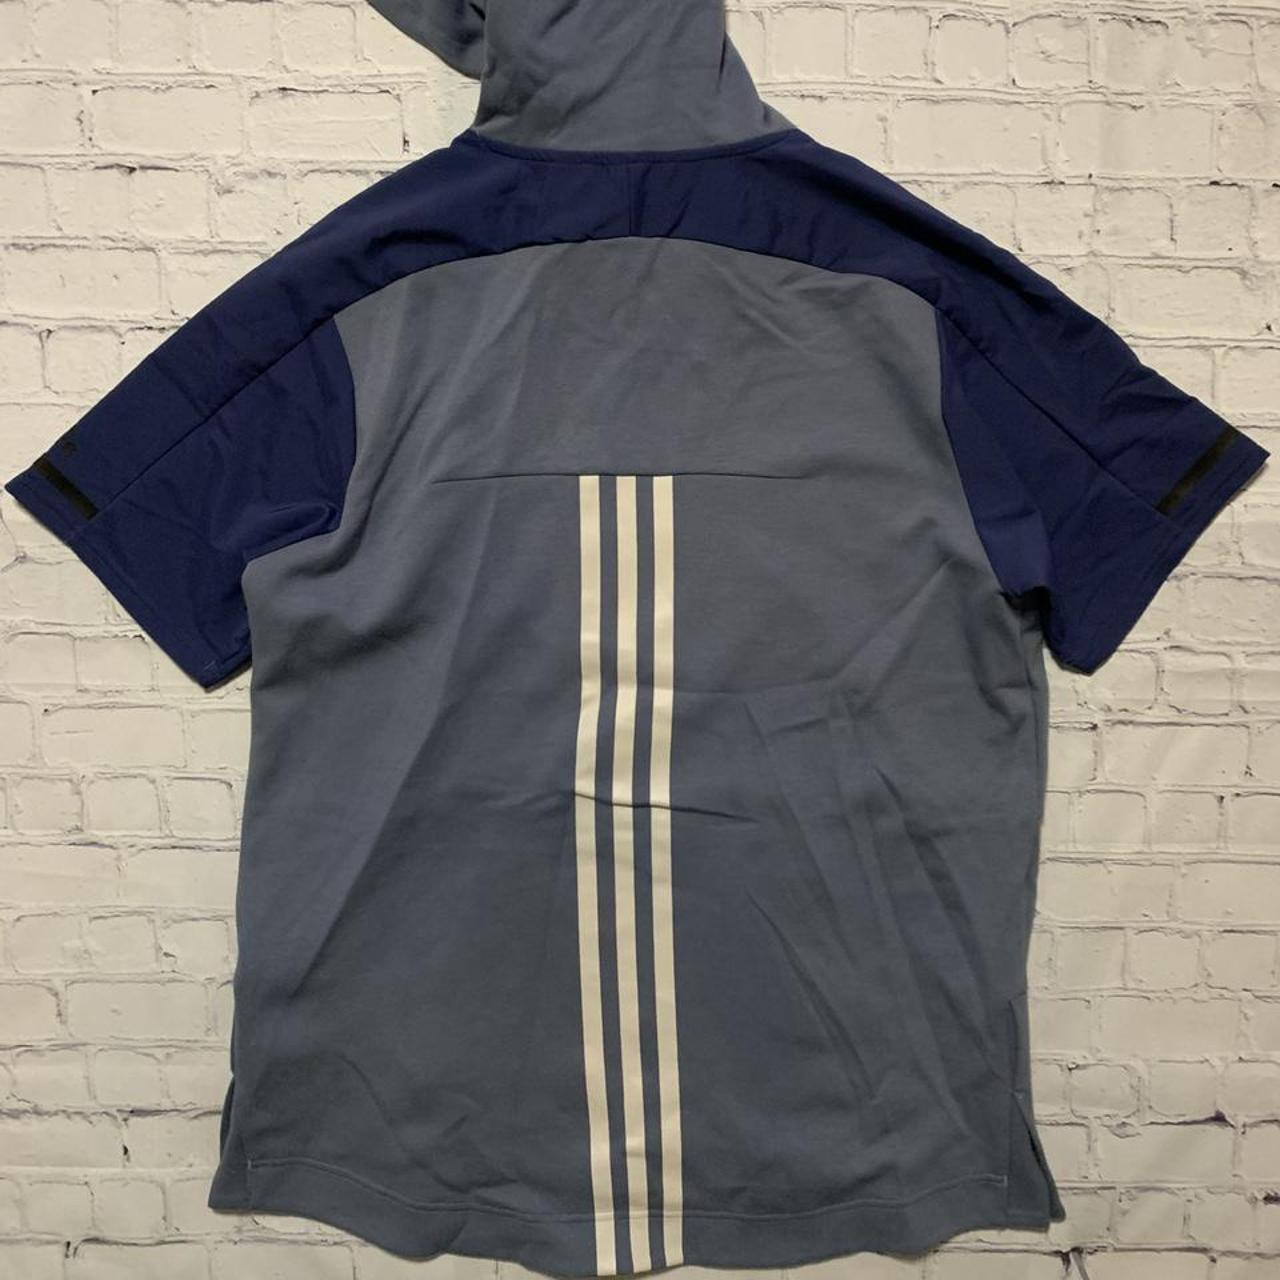 Adidas Men's Blue and Grey Sweatshirt (2)